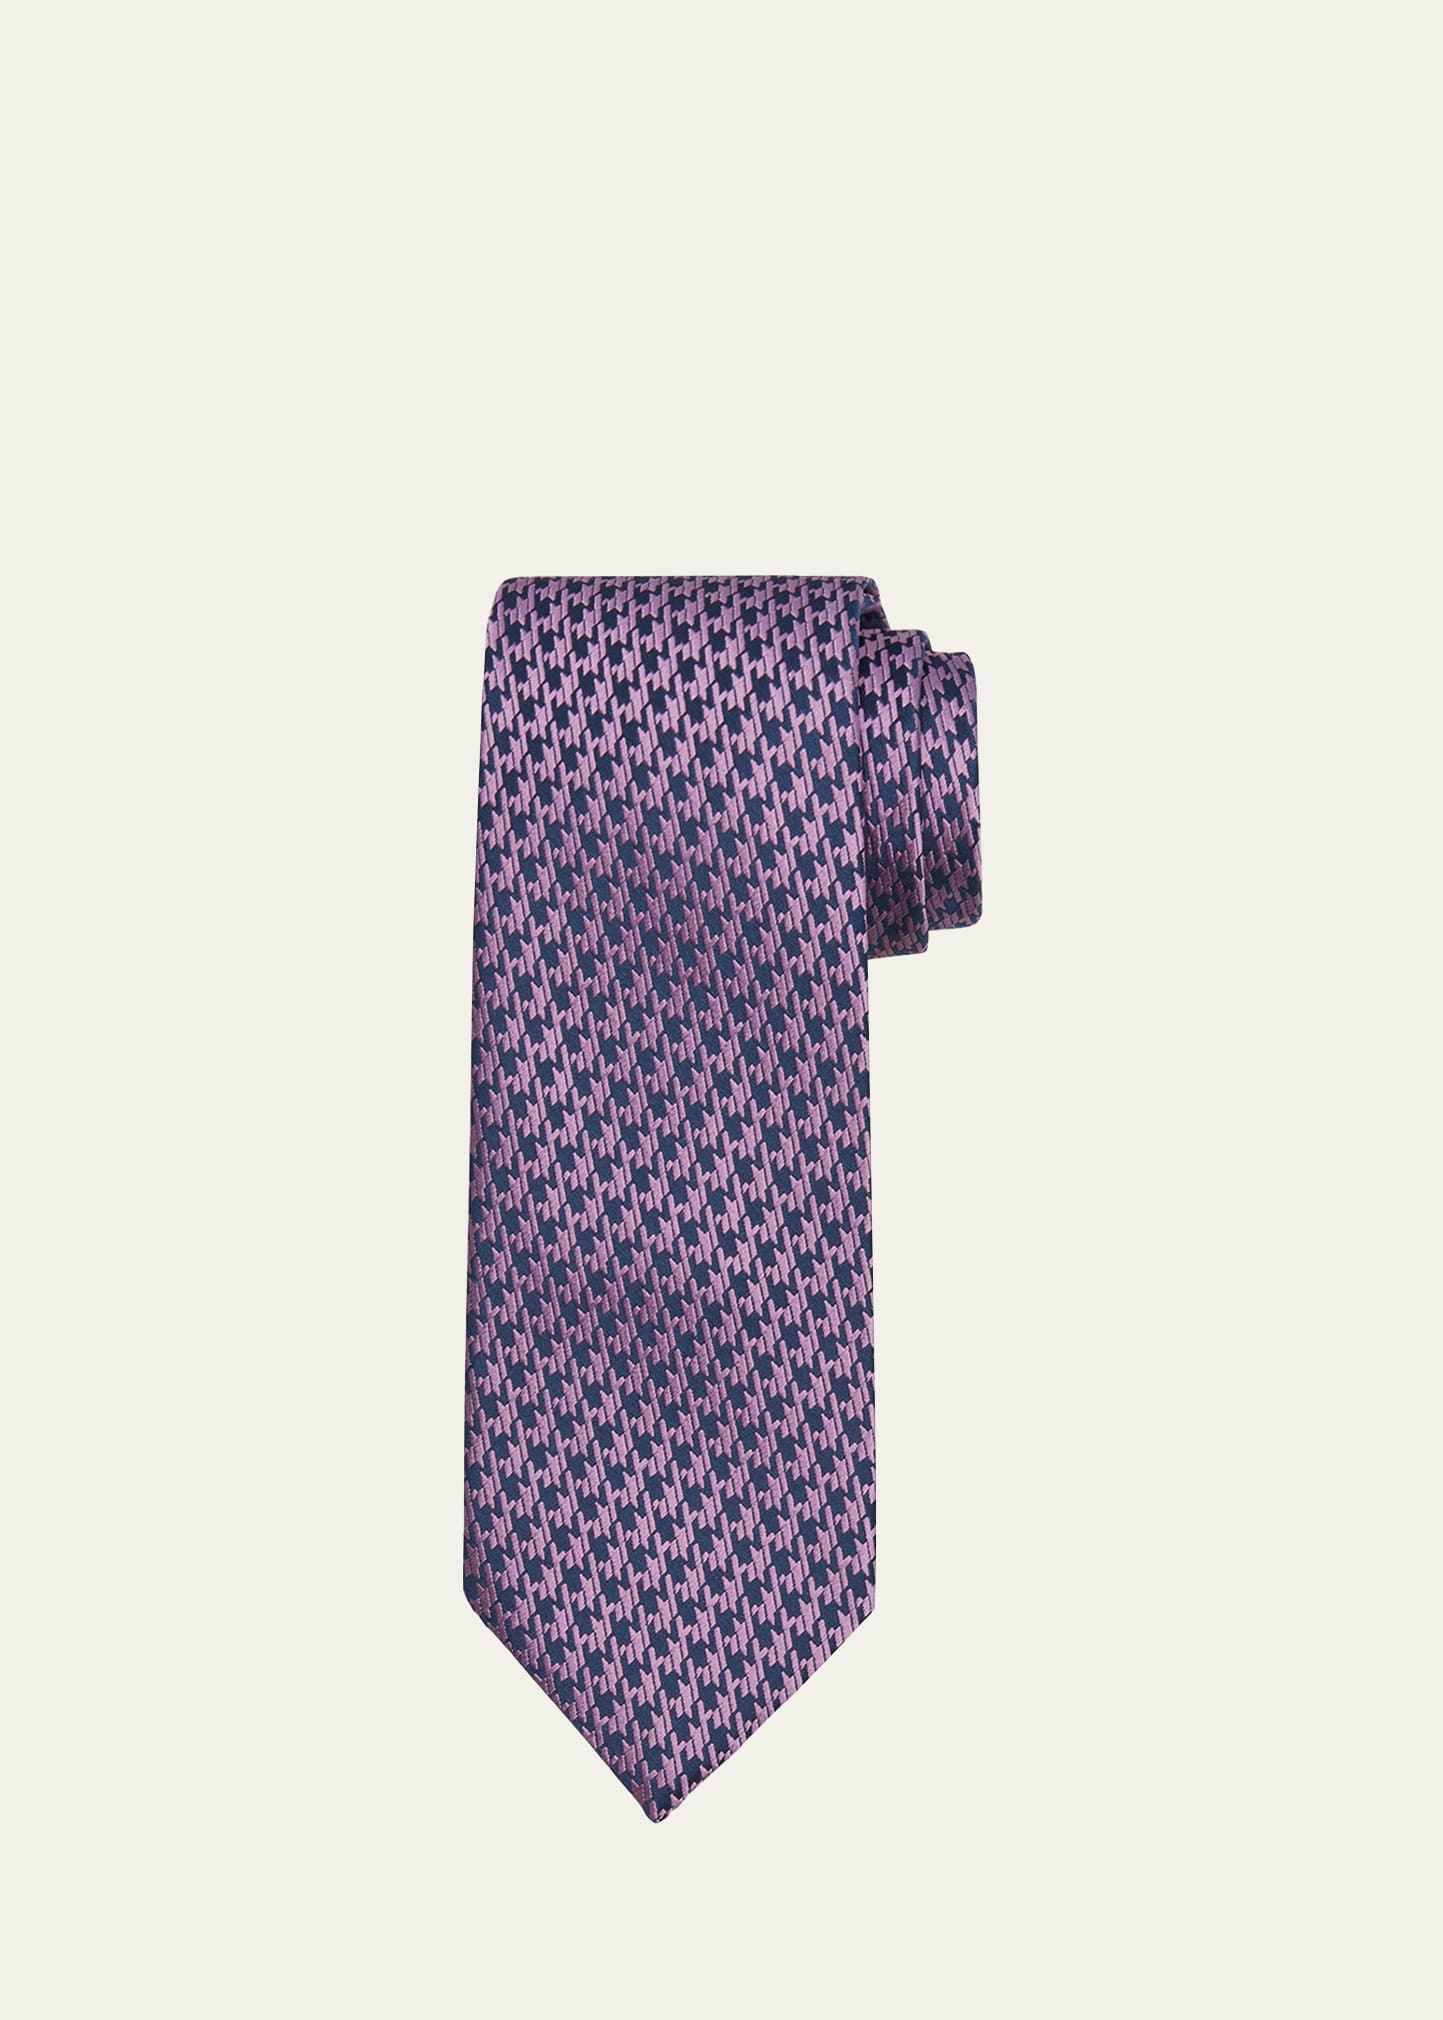 Charvet Men's Houndstooth Jacquard Silk Tie